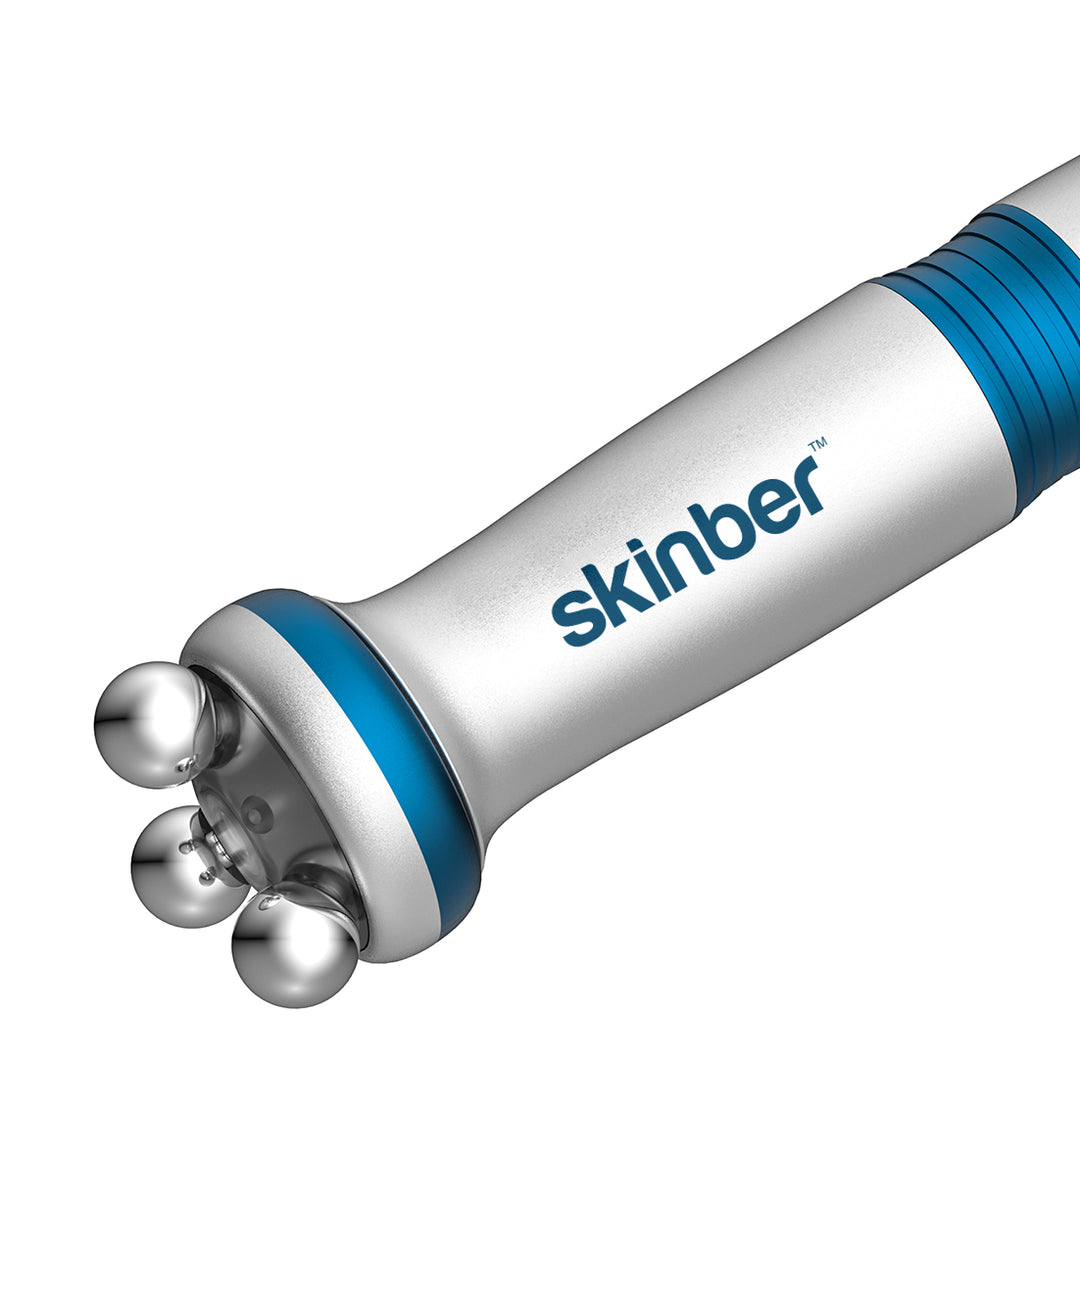 Skinber RF360 Radio Frequency Skin Tightening Device